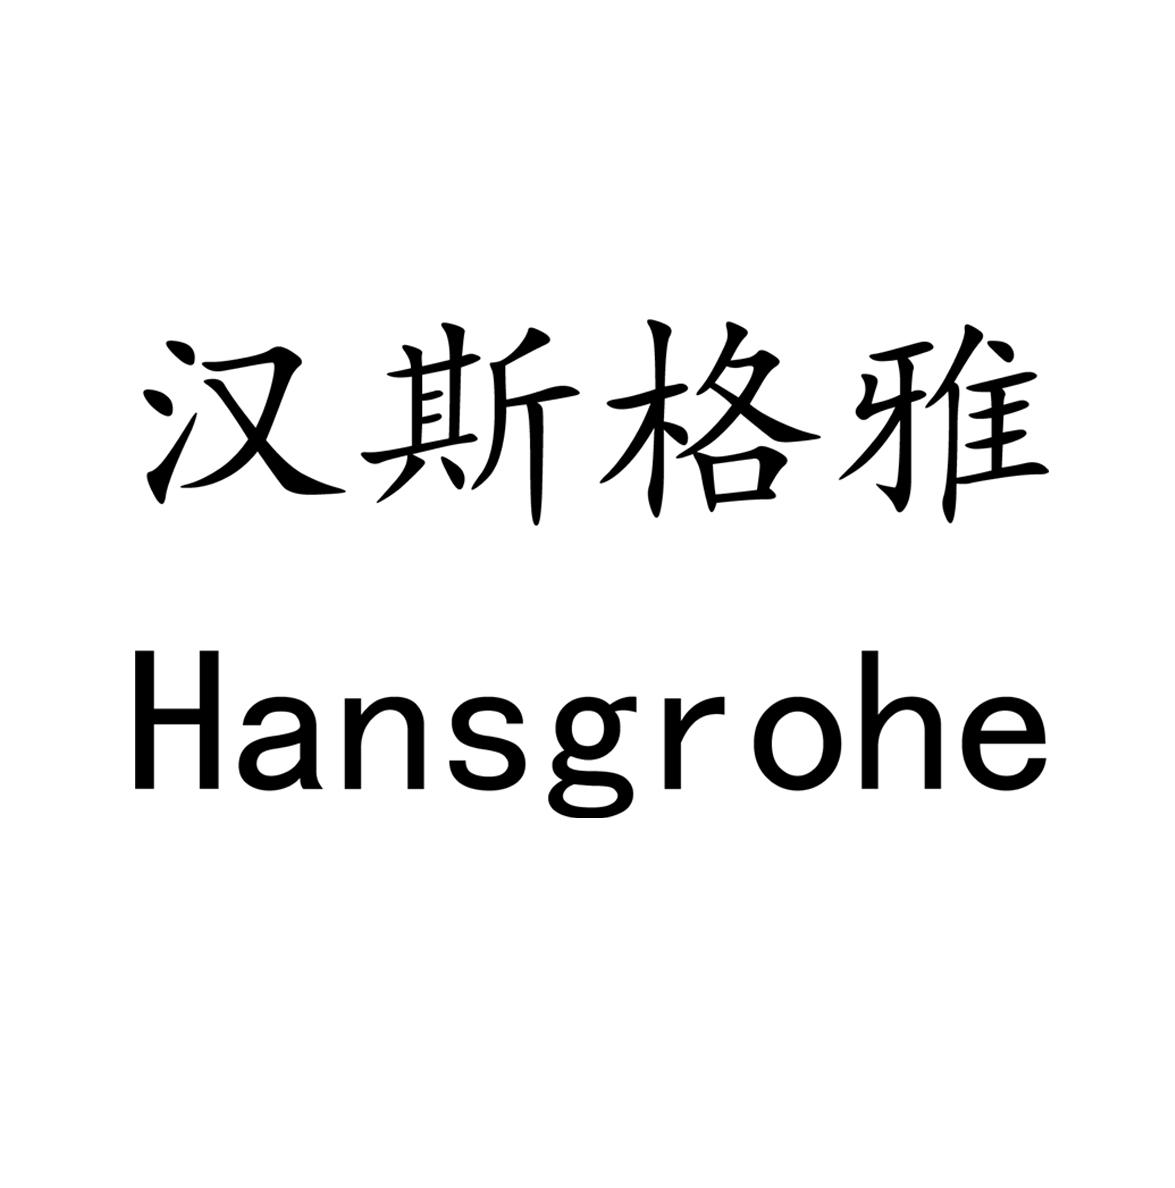 汉斯格雅 hansgrohe